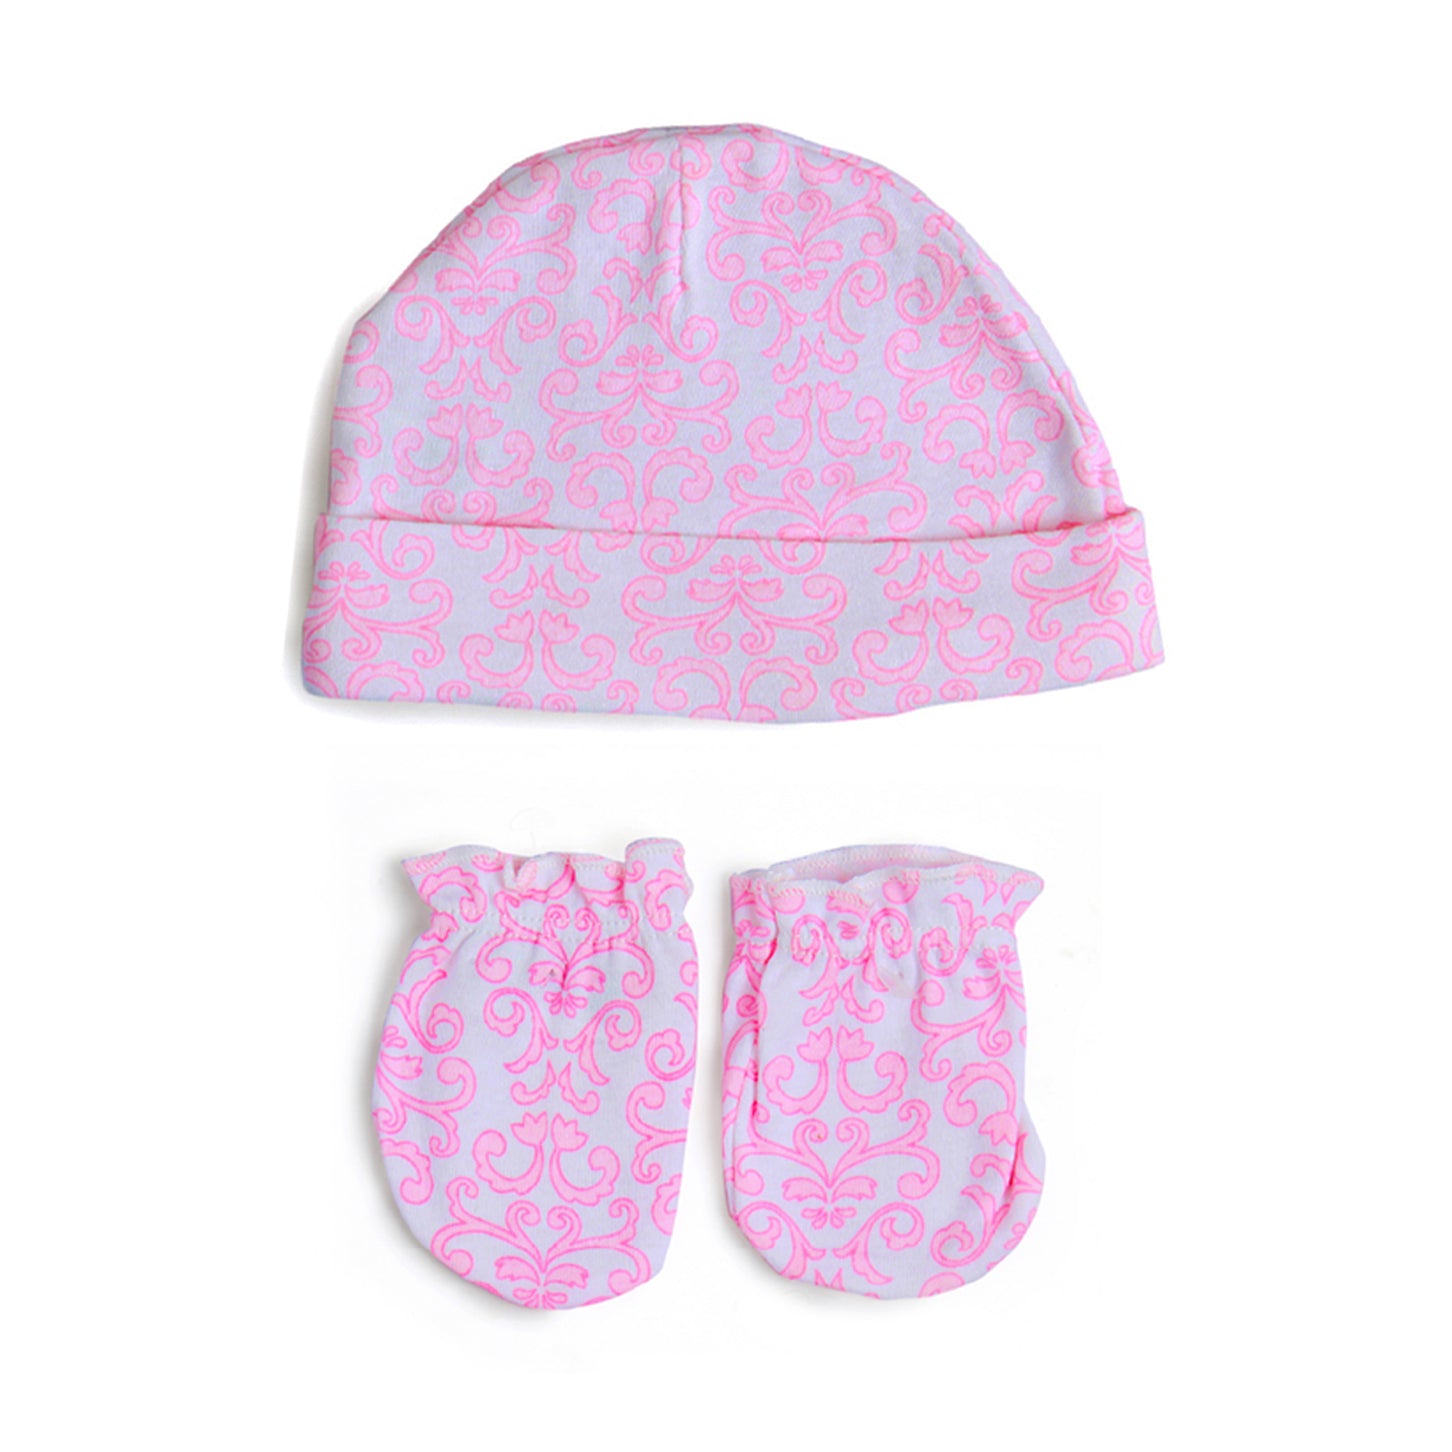 Mummy's Princess Pink Set Of 2 Caps And 1 Mitten - Baby Moo